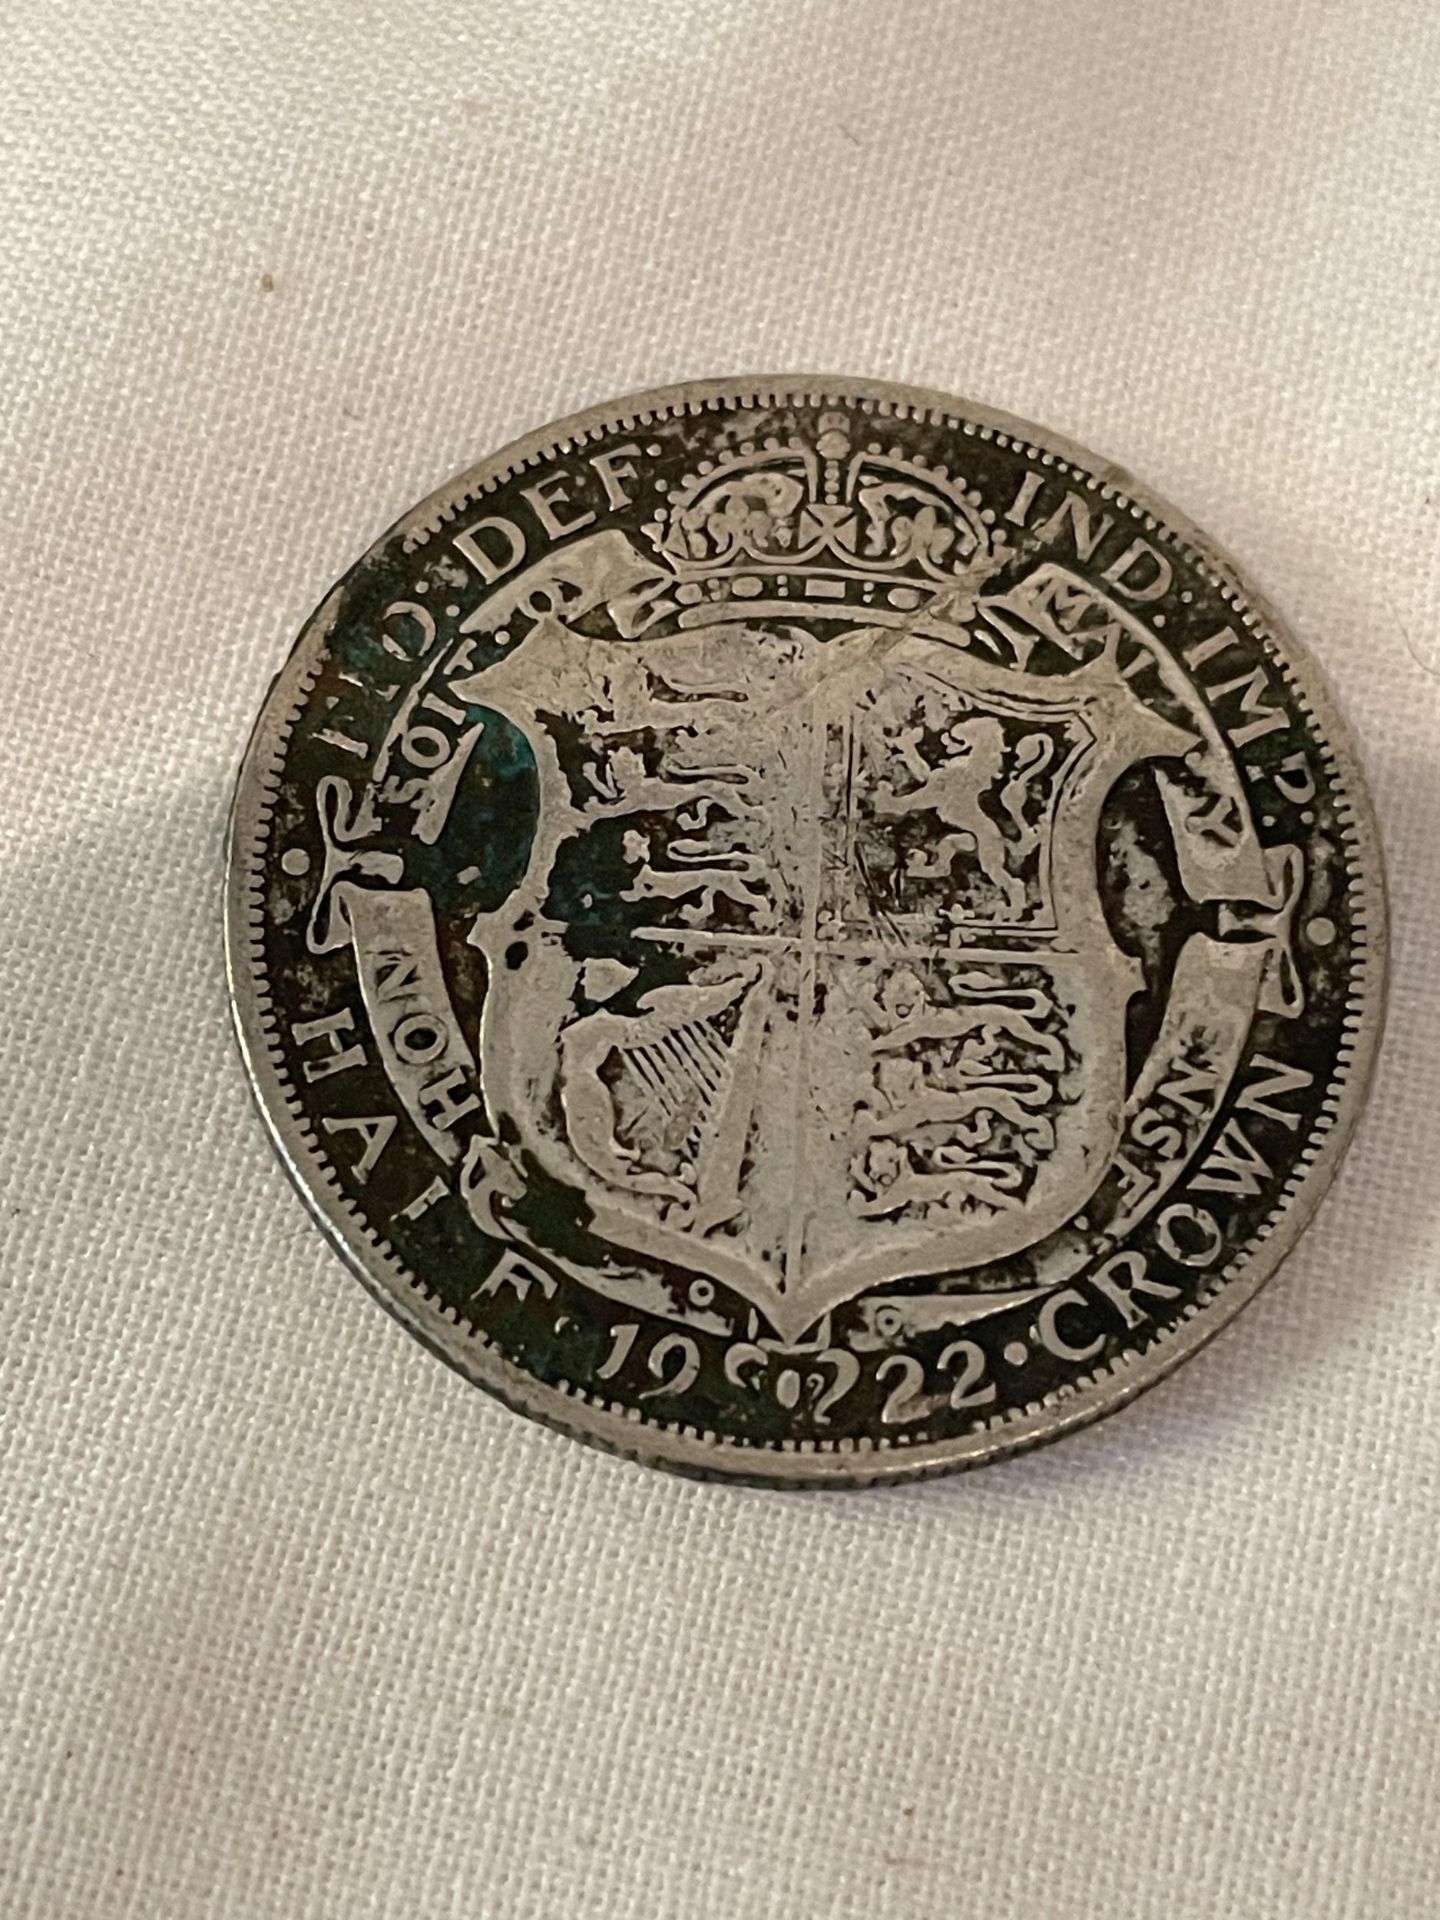 A GEORGE V 1922 50% SILVER HALF CROWN COIN